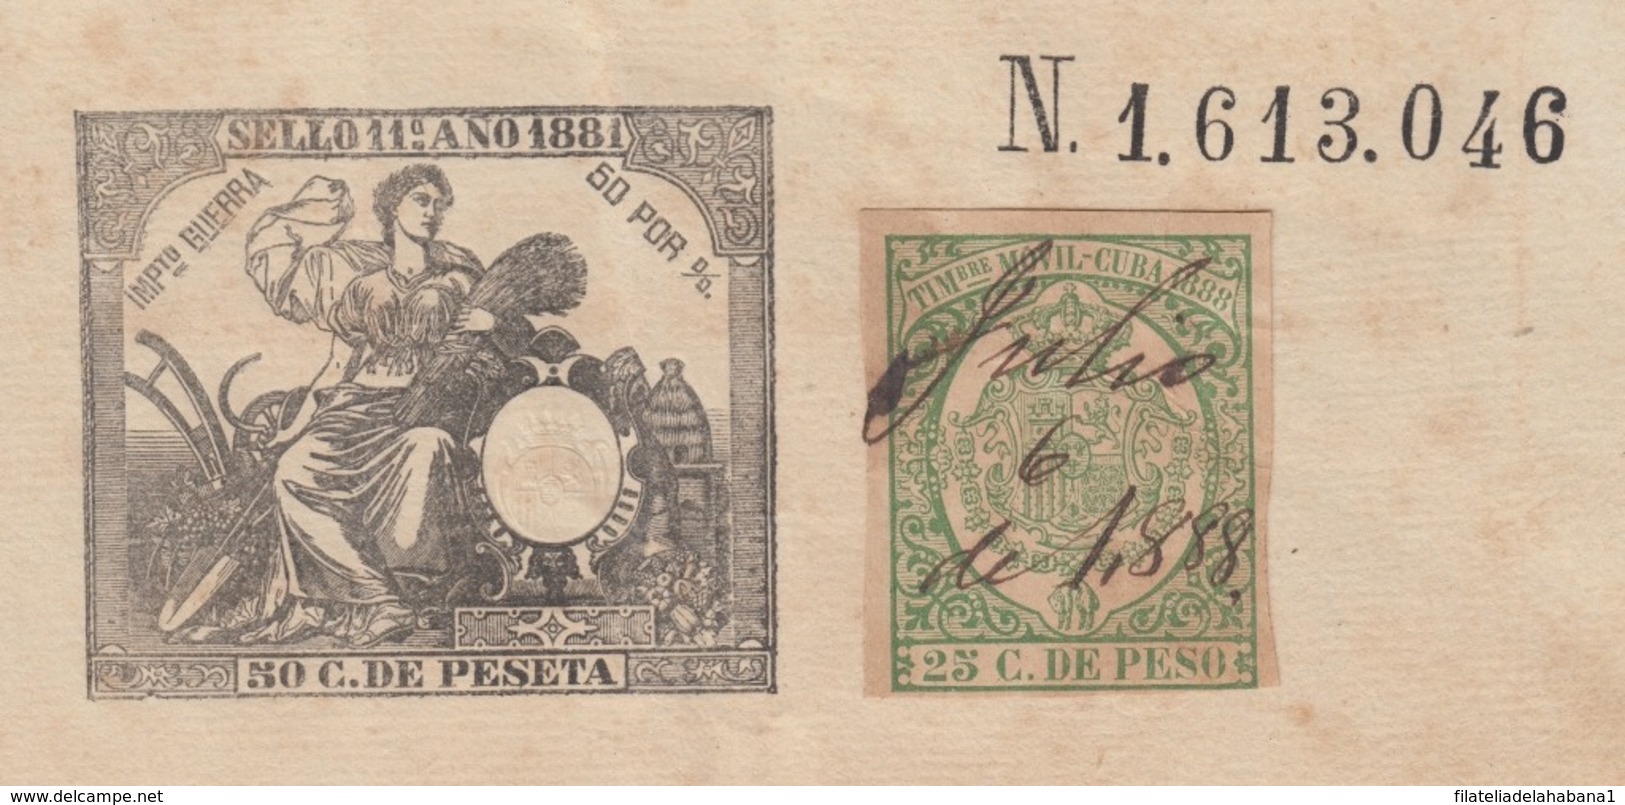 TMO-51 CUBA (LG1515) SPAIN ANT. REVENUE 1881 SEALLED PAPER + TIMBRE MOVIL 1886. - Portomarken